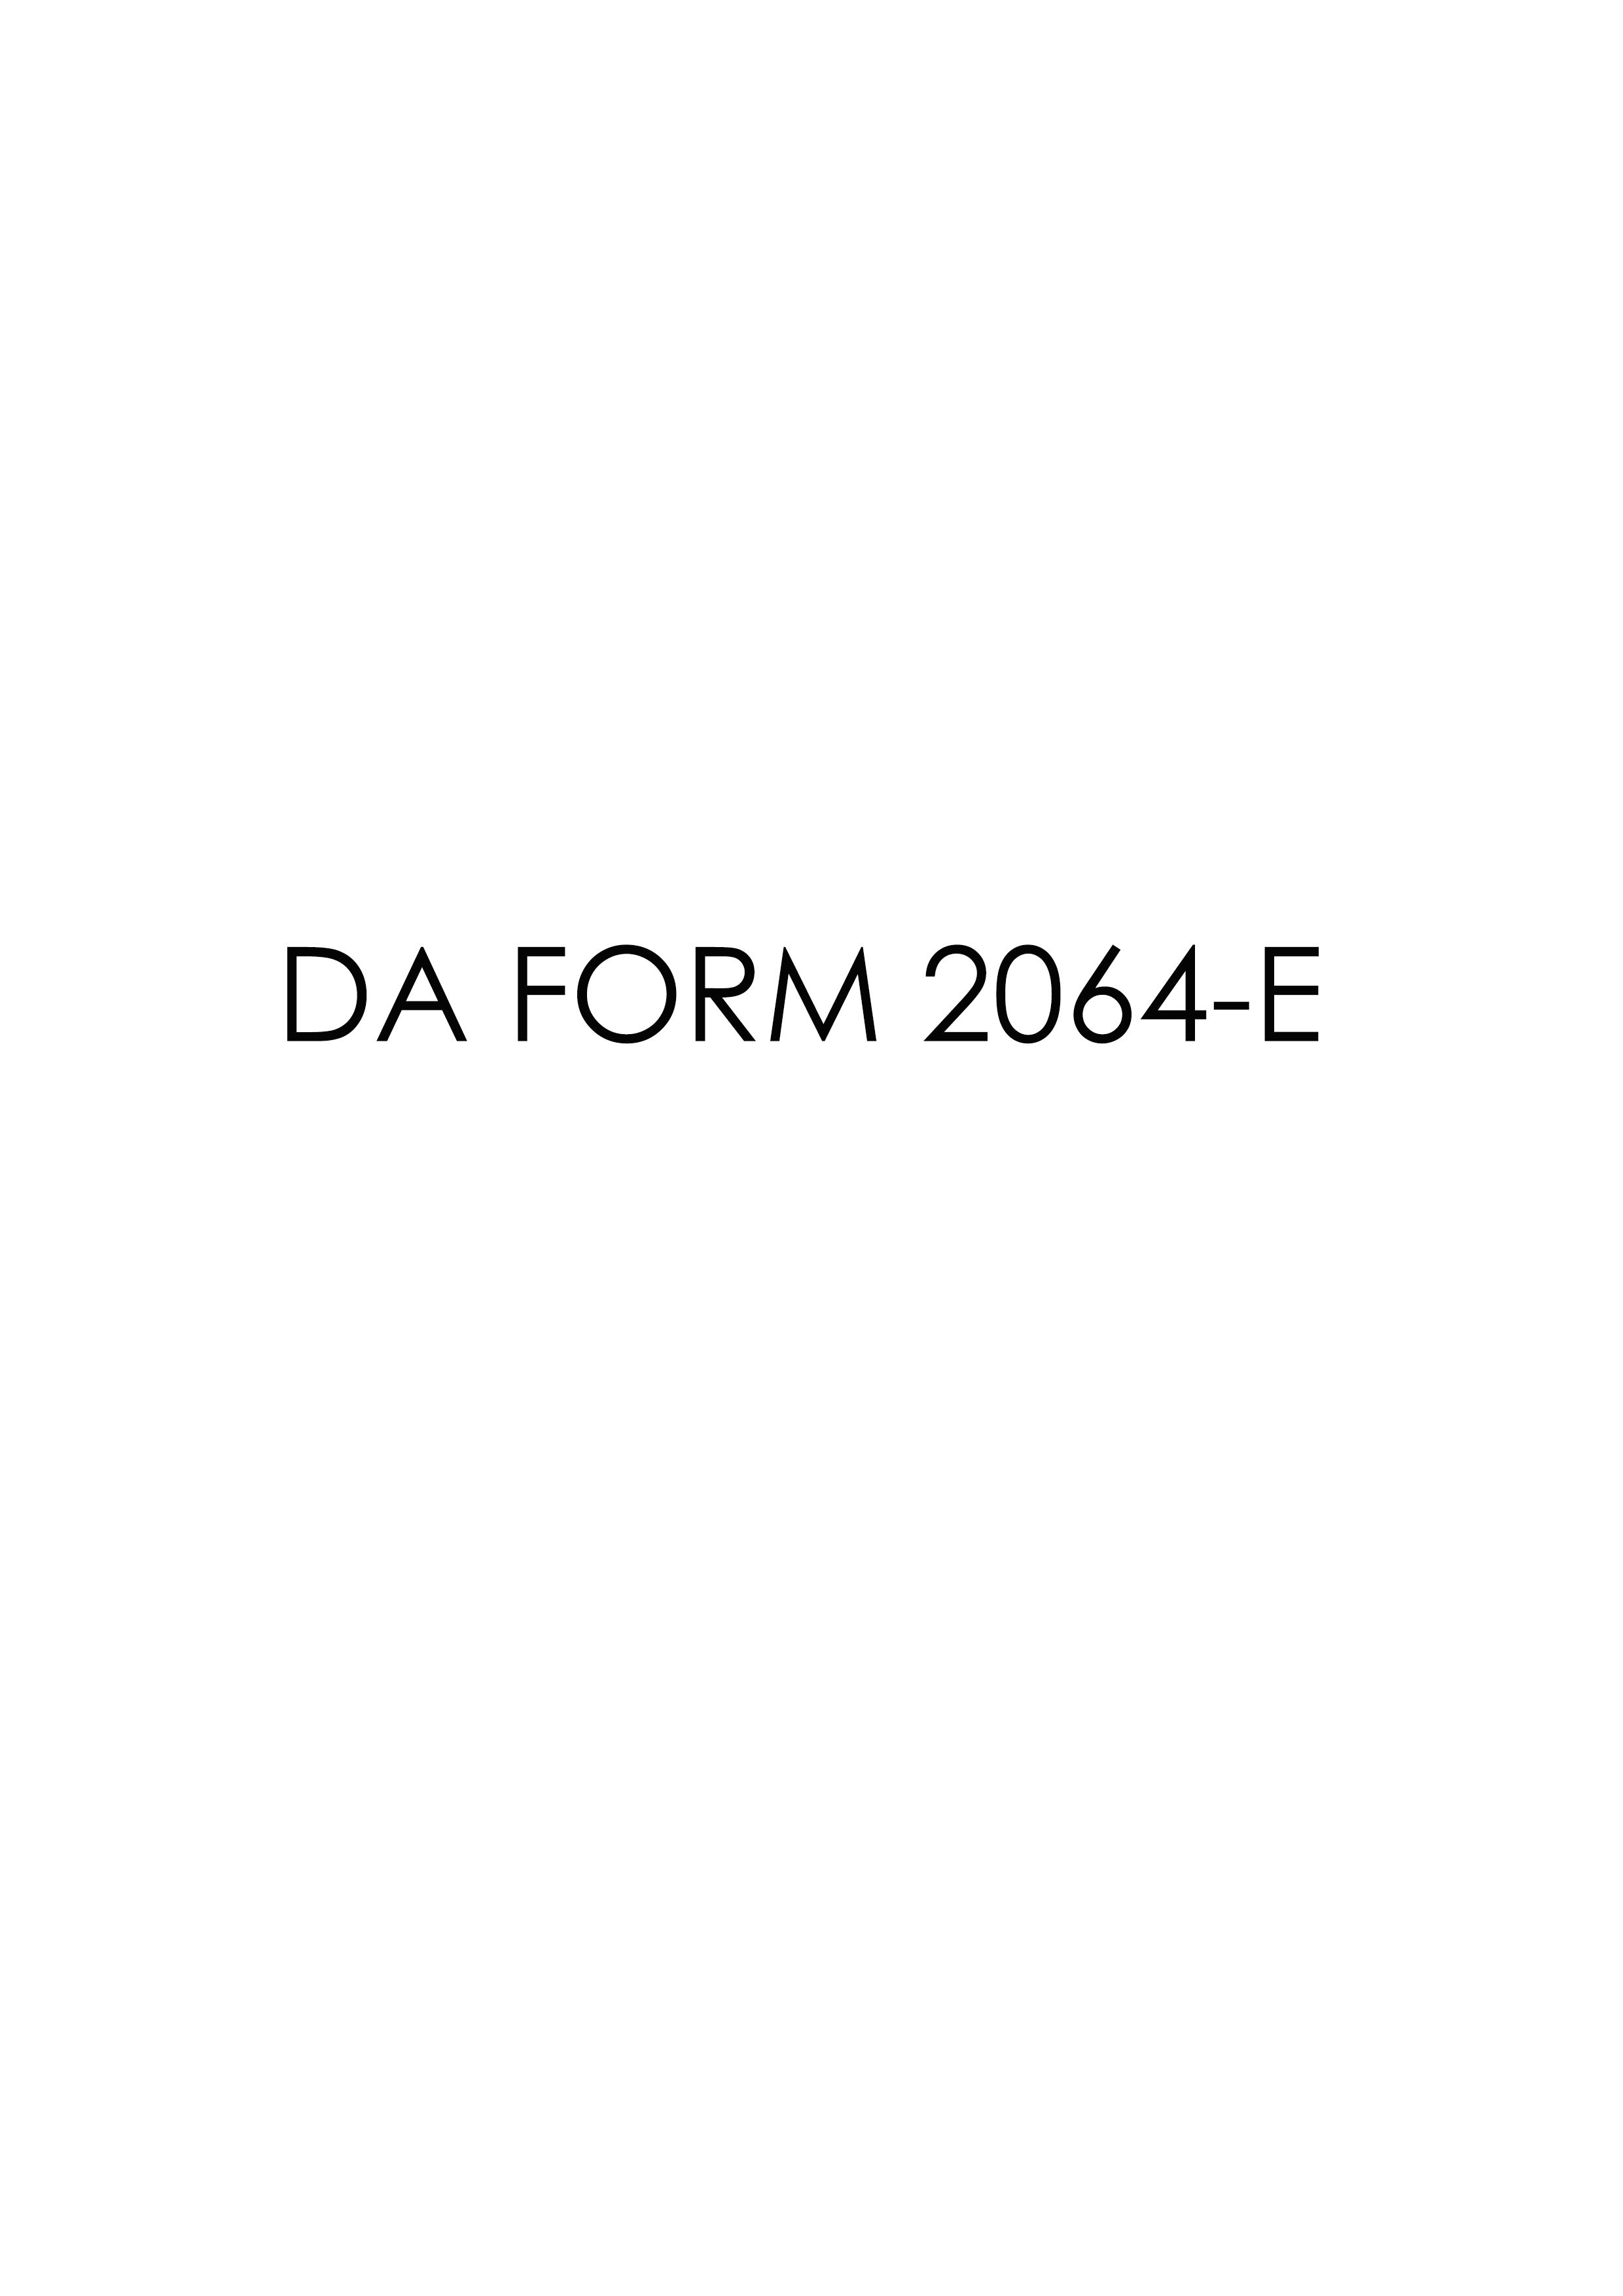 Download da 2064-E Form Free